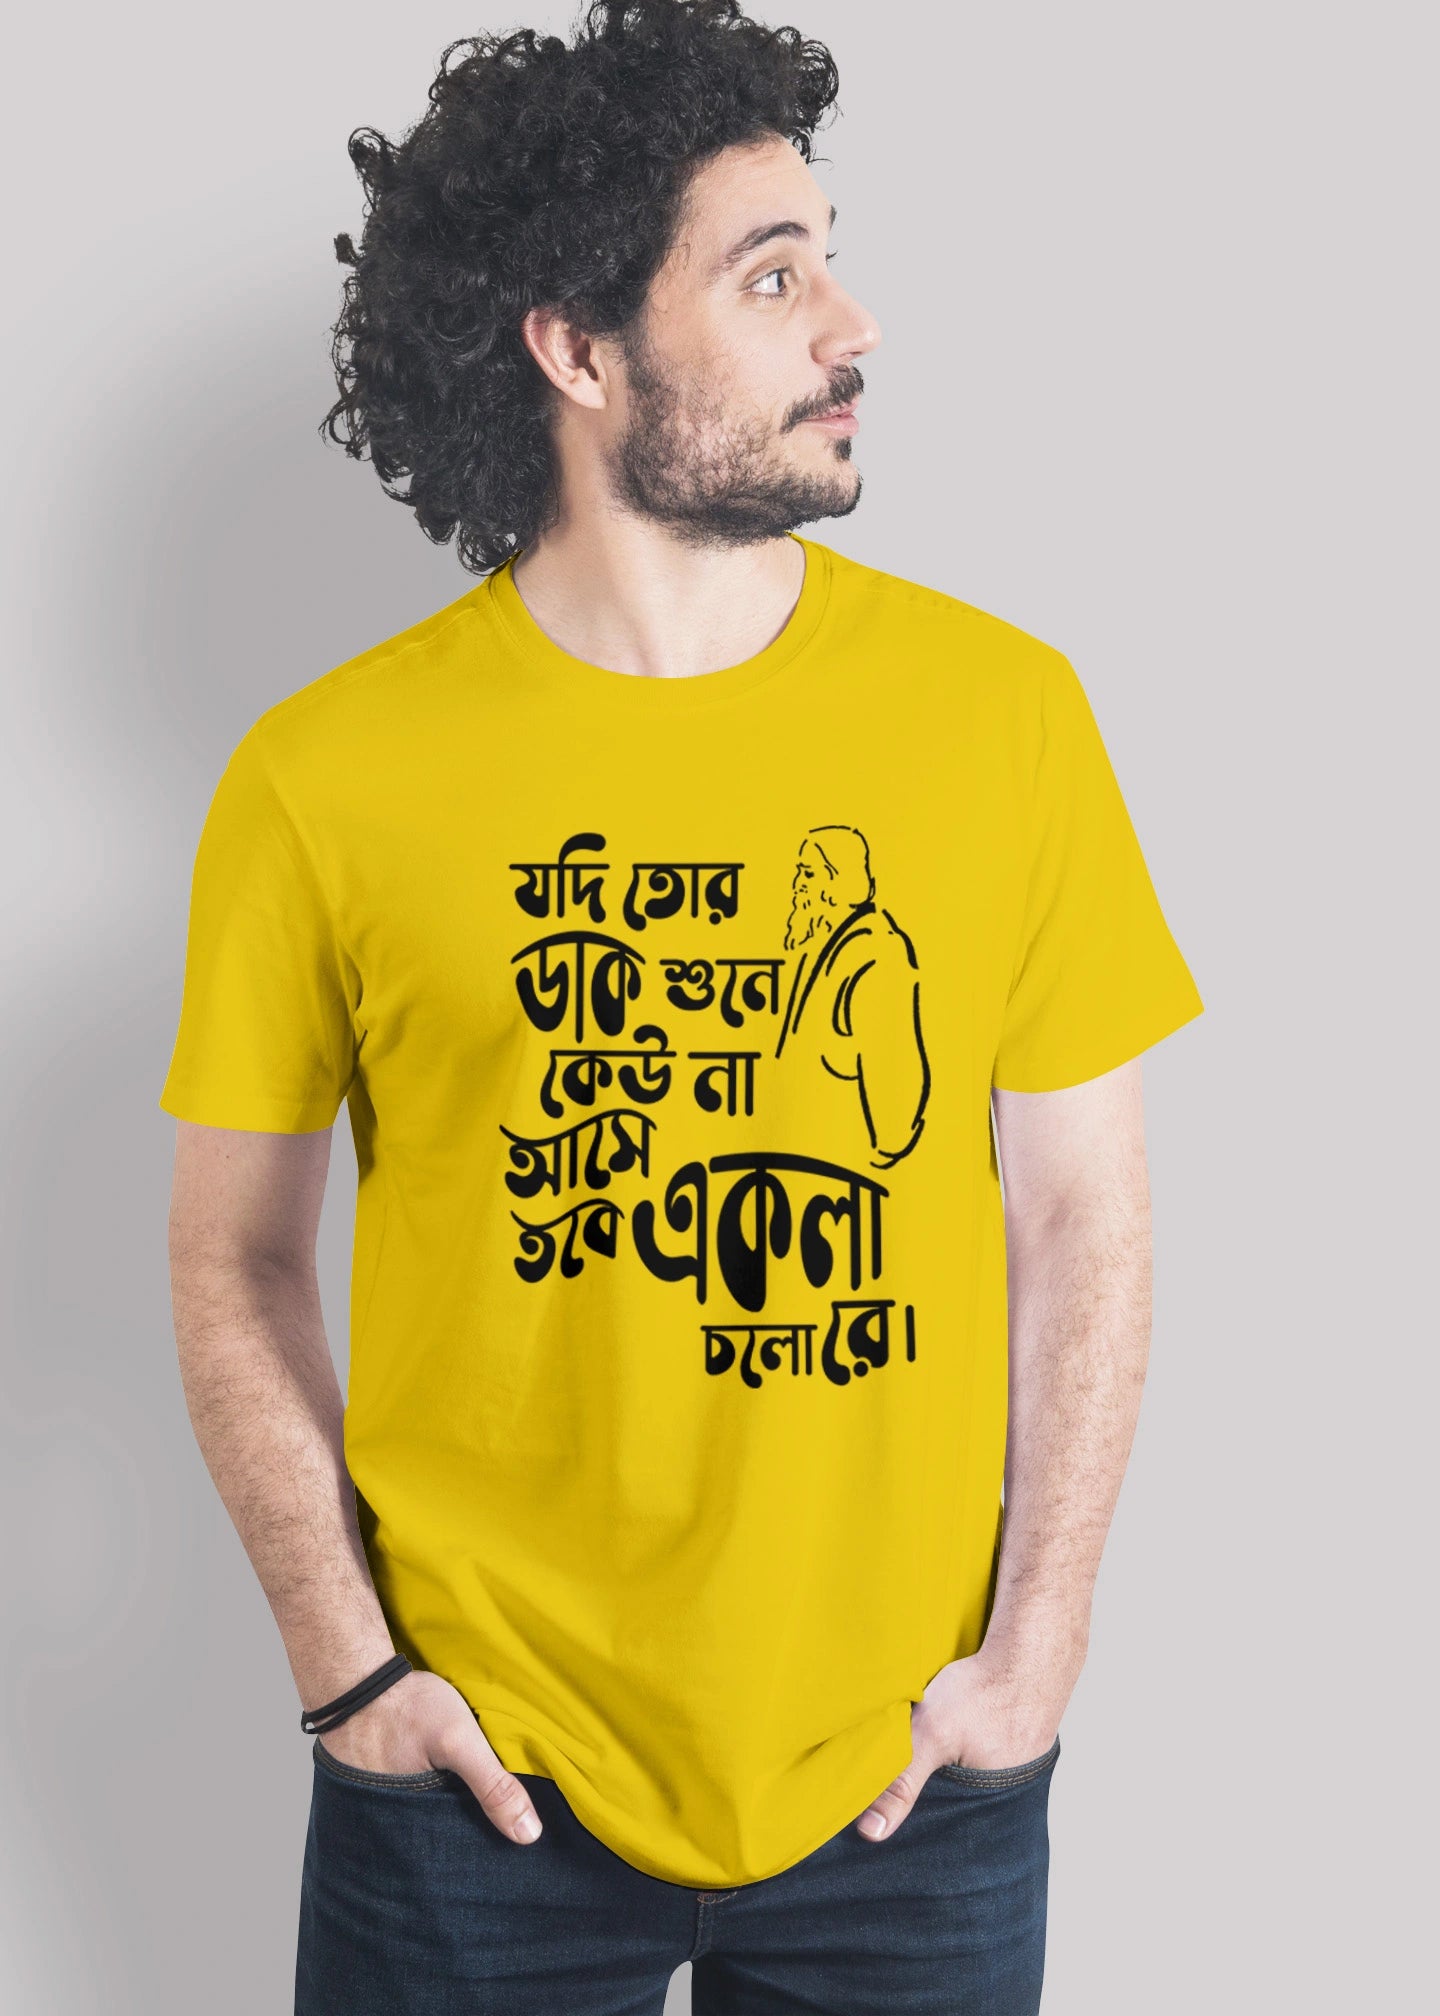 Jodi tor dak shune keu bengali Printed Half Sleeve Premium Cotton T-shirt